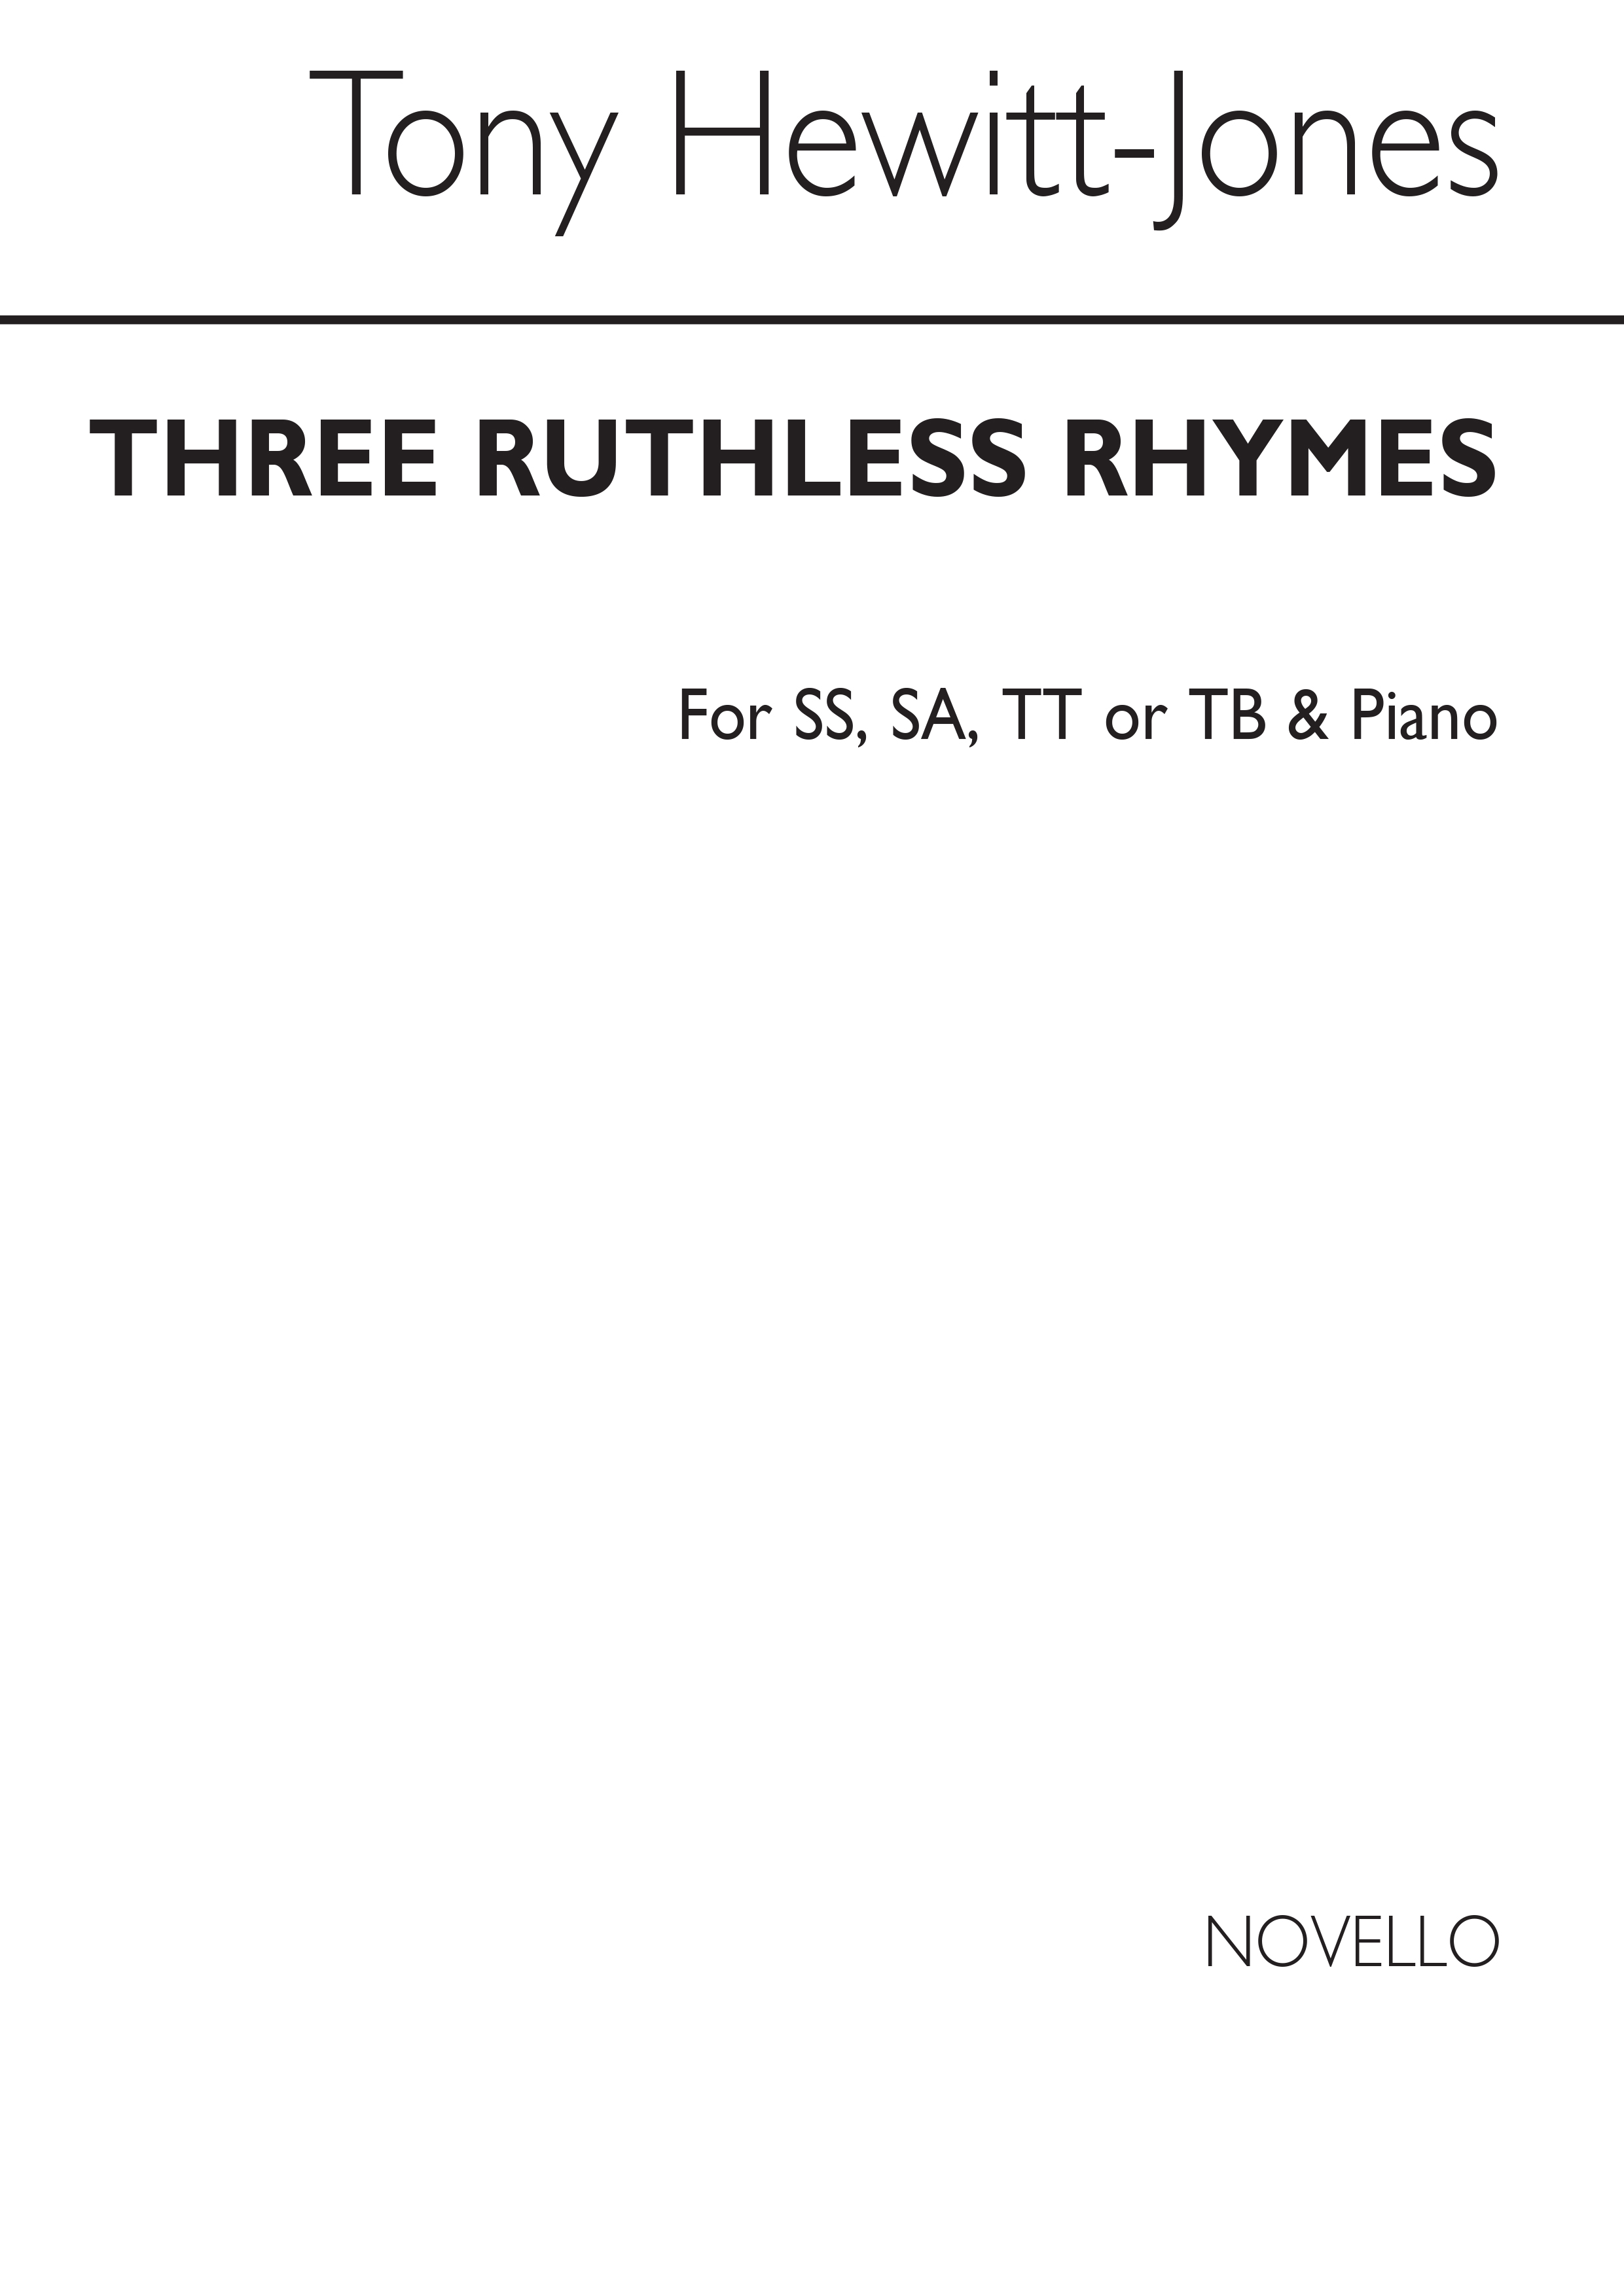 Hewitt-jones, T Three Ruthless Rhymes (Ss, Sa, Tt, Or Tb)/Piano